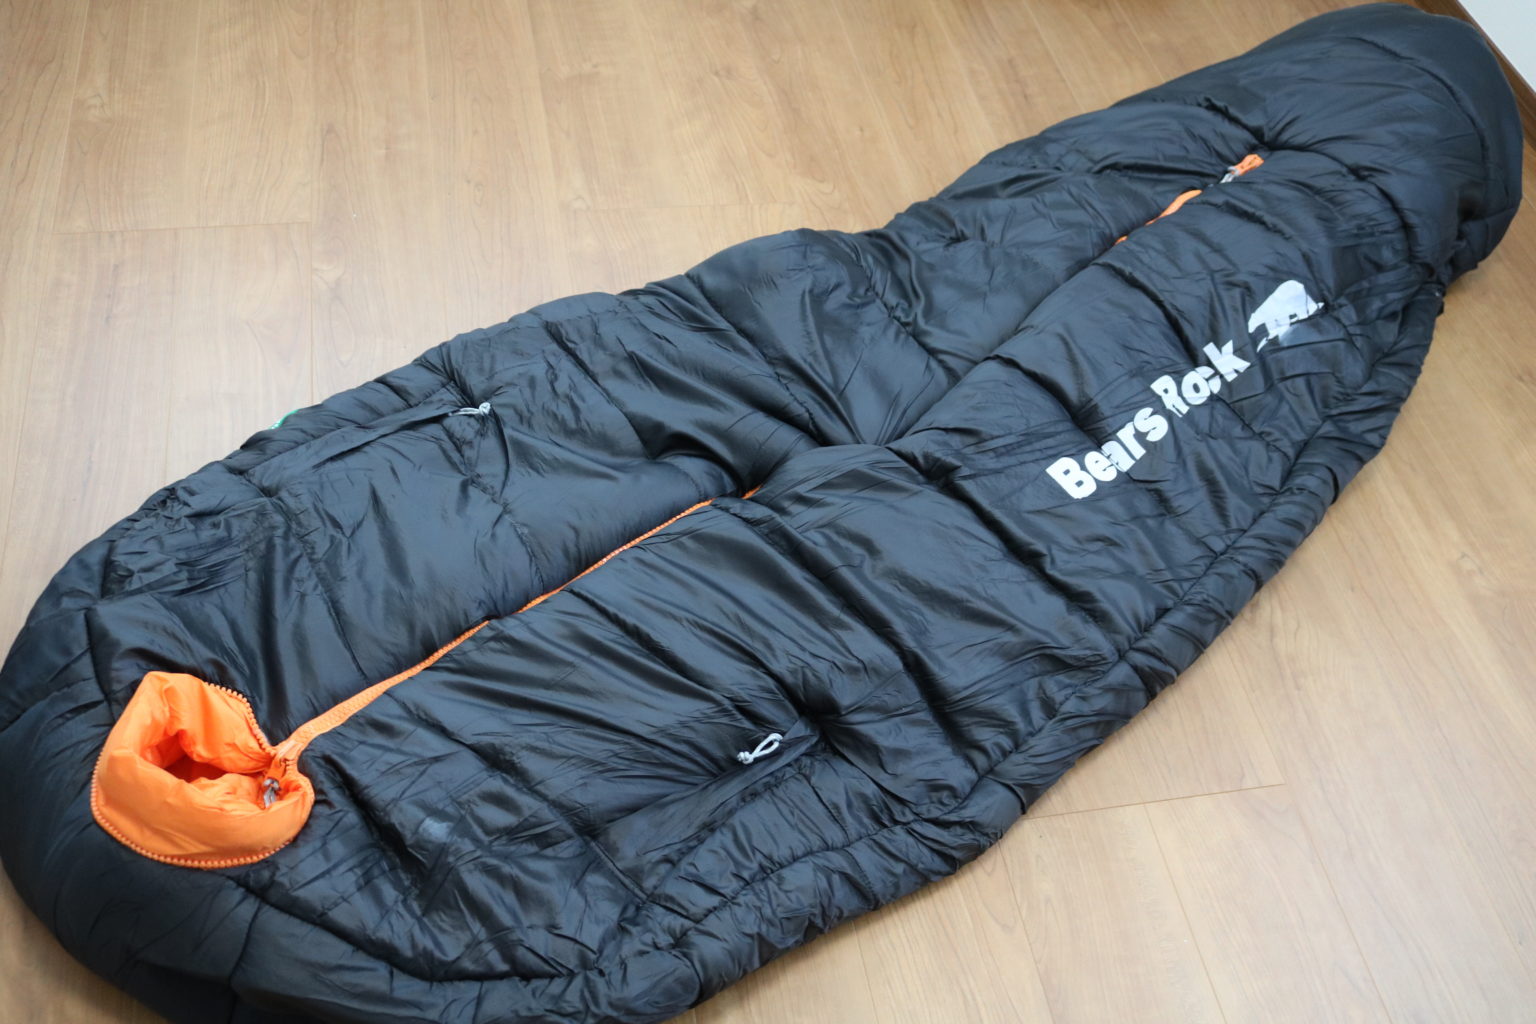 Bears Rock ベアーズロック −34℃マミー型寝袋 FX-453G - 寝袋/寝具